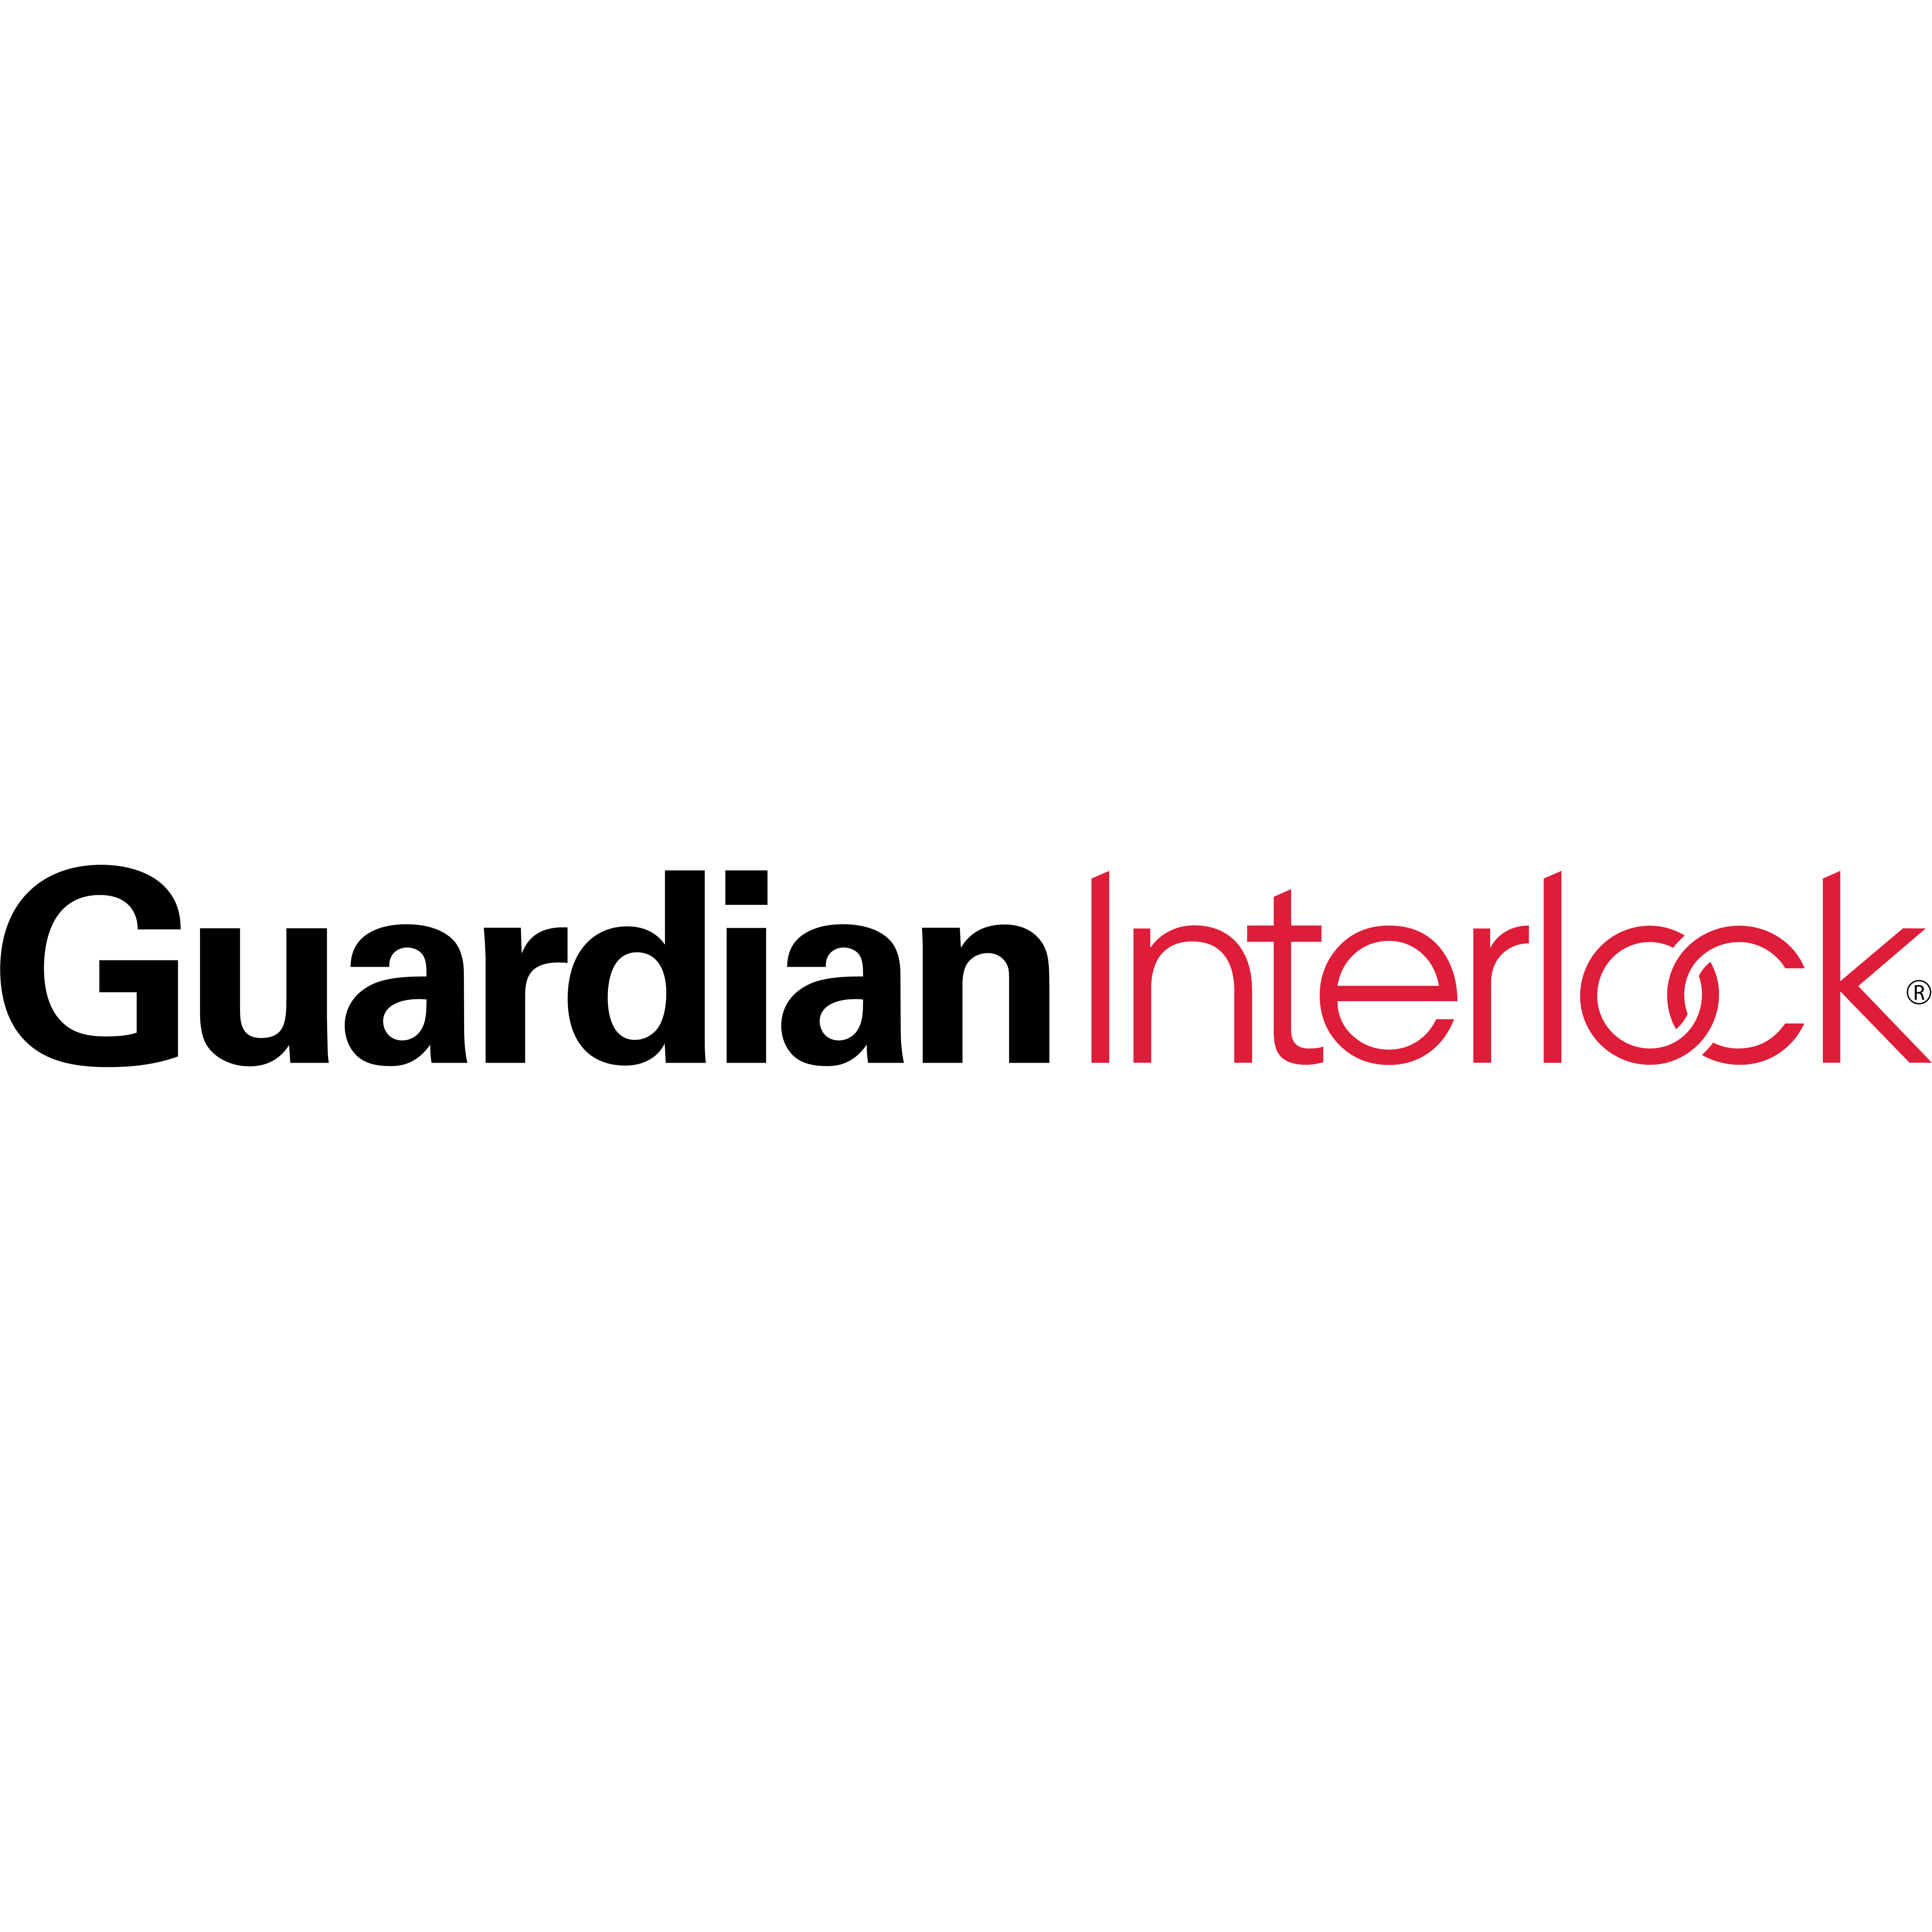 Guardian Interlock - Russellville, KY 42276 - (270)807-5523 | ShowMeLocal.com